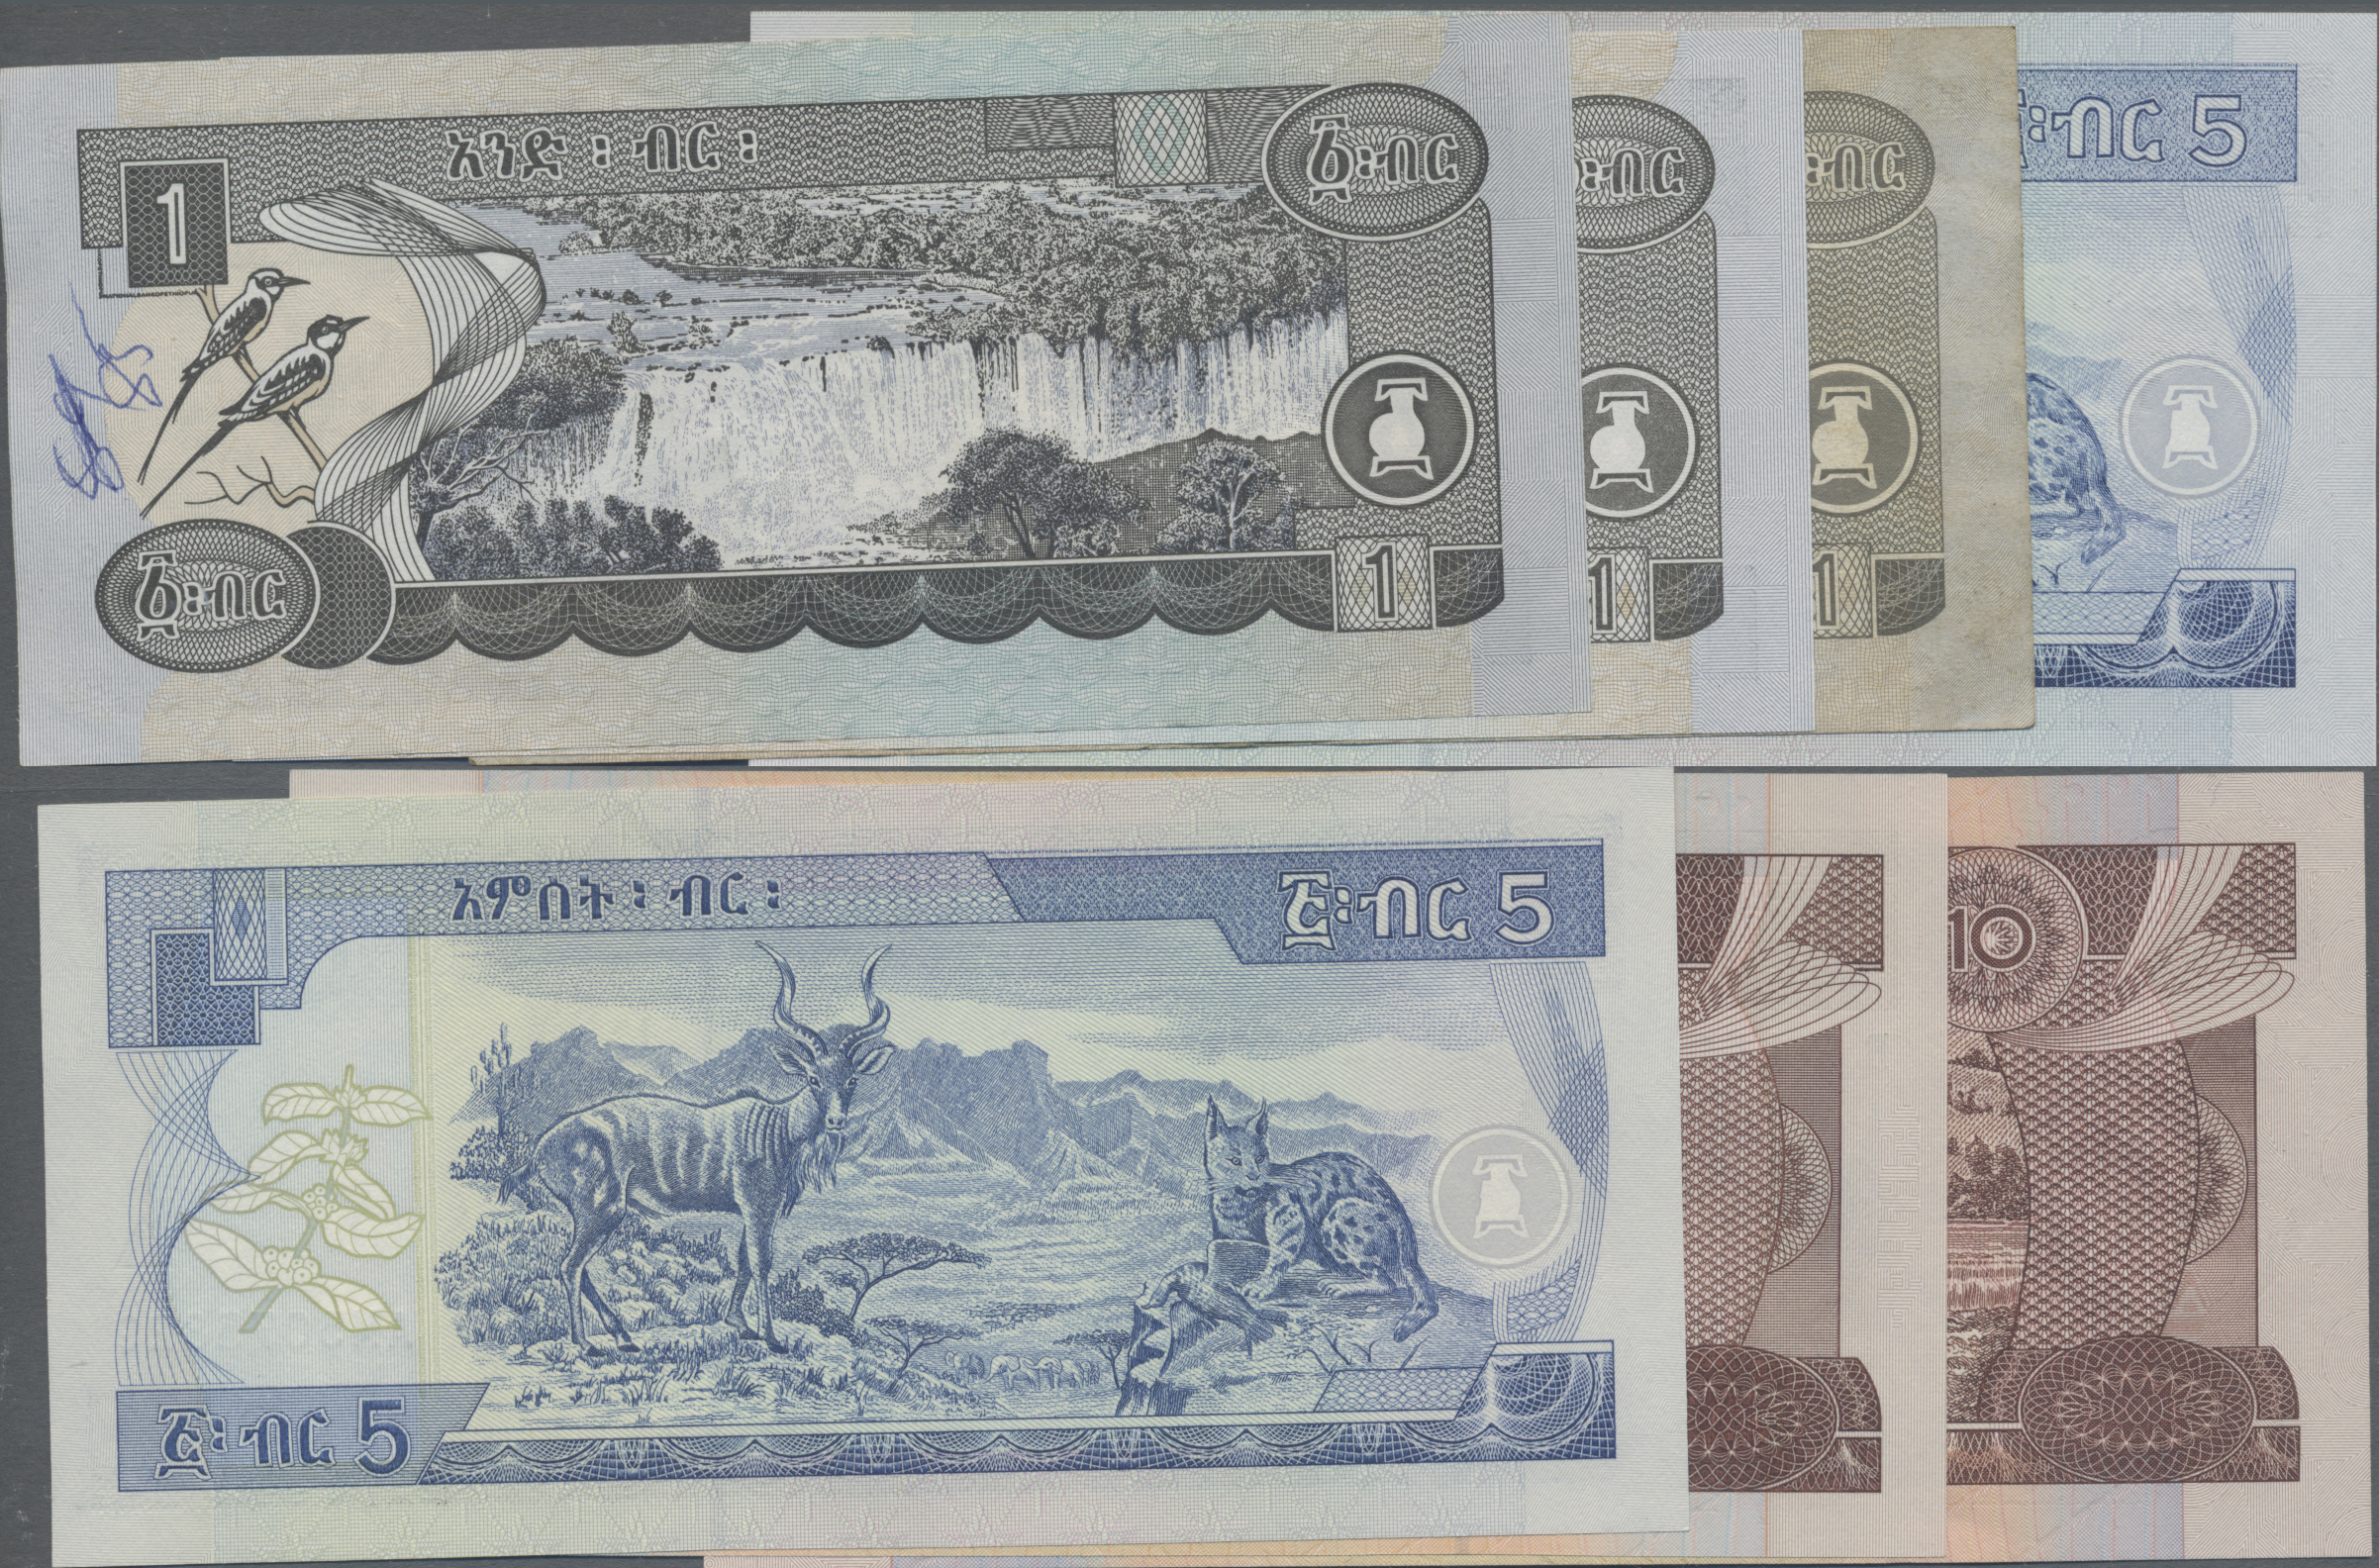 Lot 14107 - Ethiopia / Äthiopien | Banknoten  -  Auktionshaus Christoph Gärtner GmbH & Co. KG 53rd AUCTION - Day 6 Coins/Banknotes